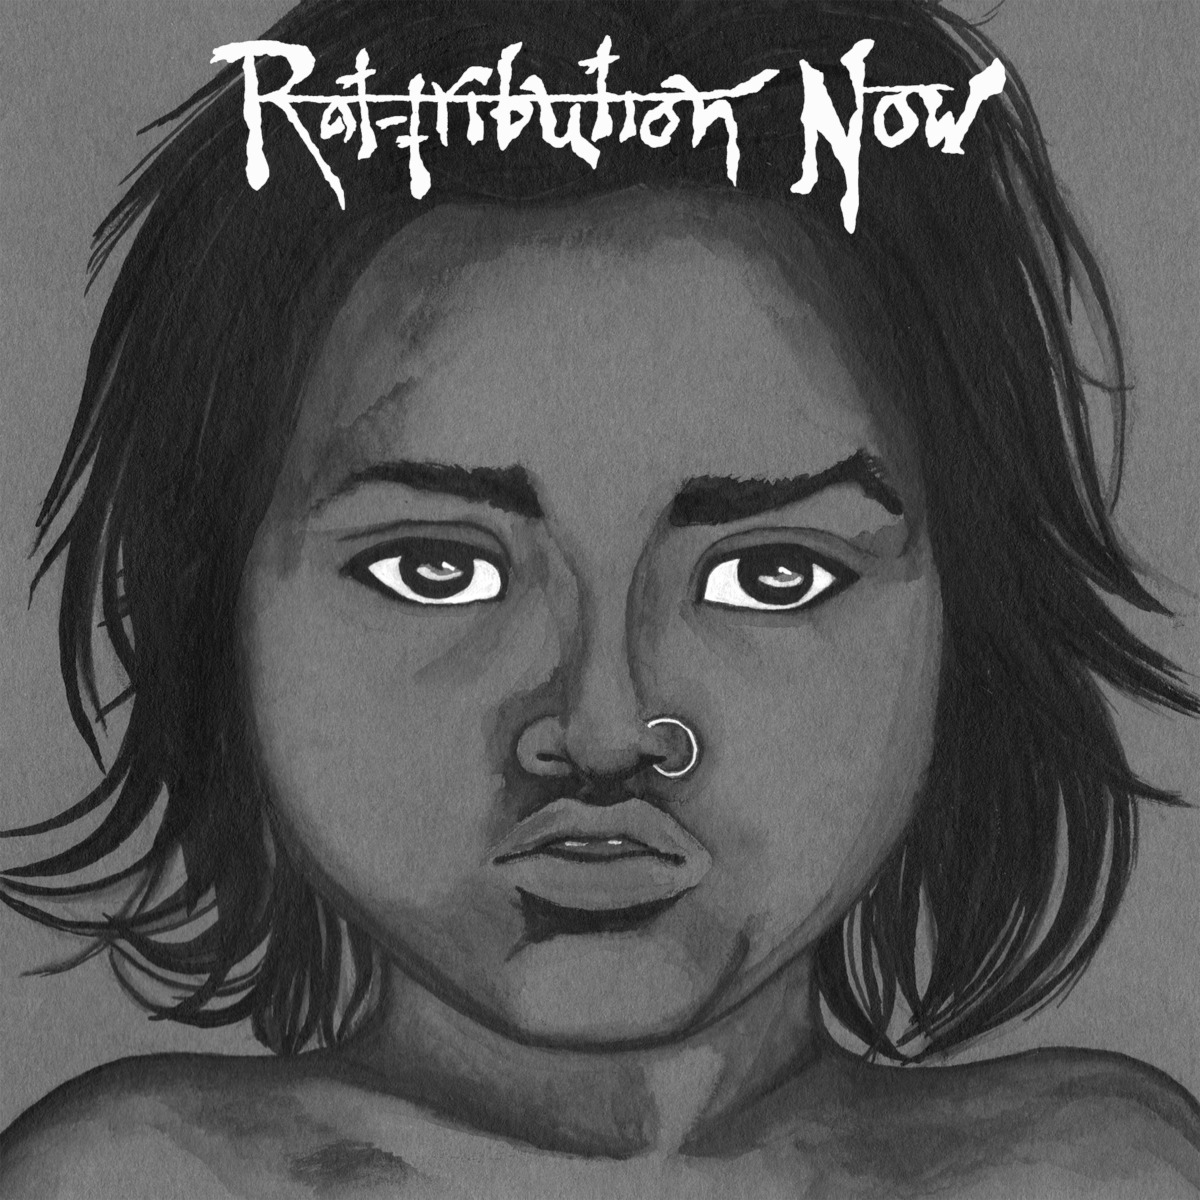 »Rat-Tribution Now« (Illustration: Saba Lou Khan)